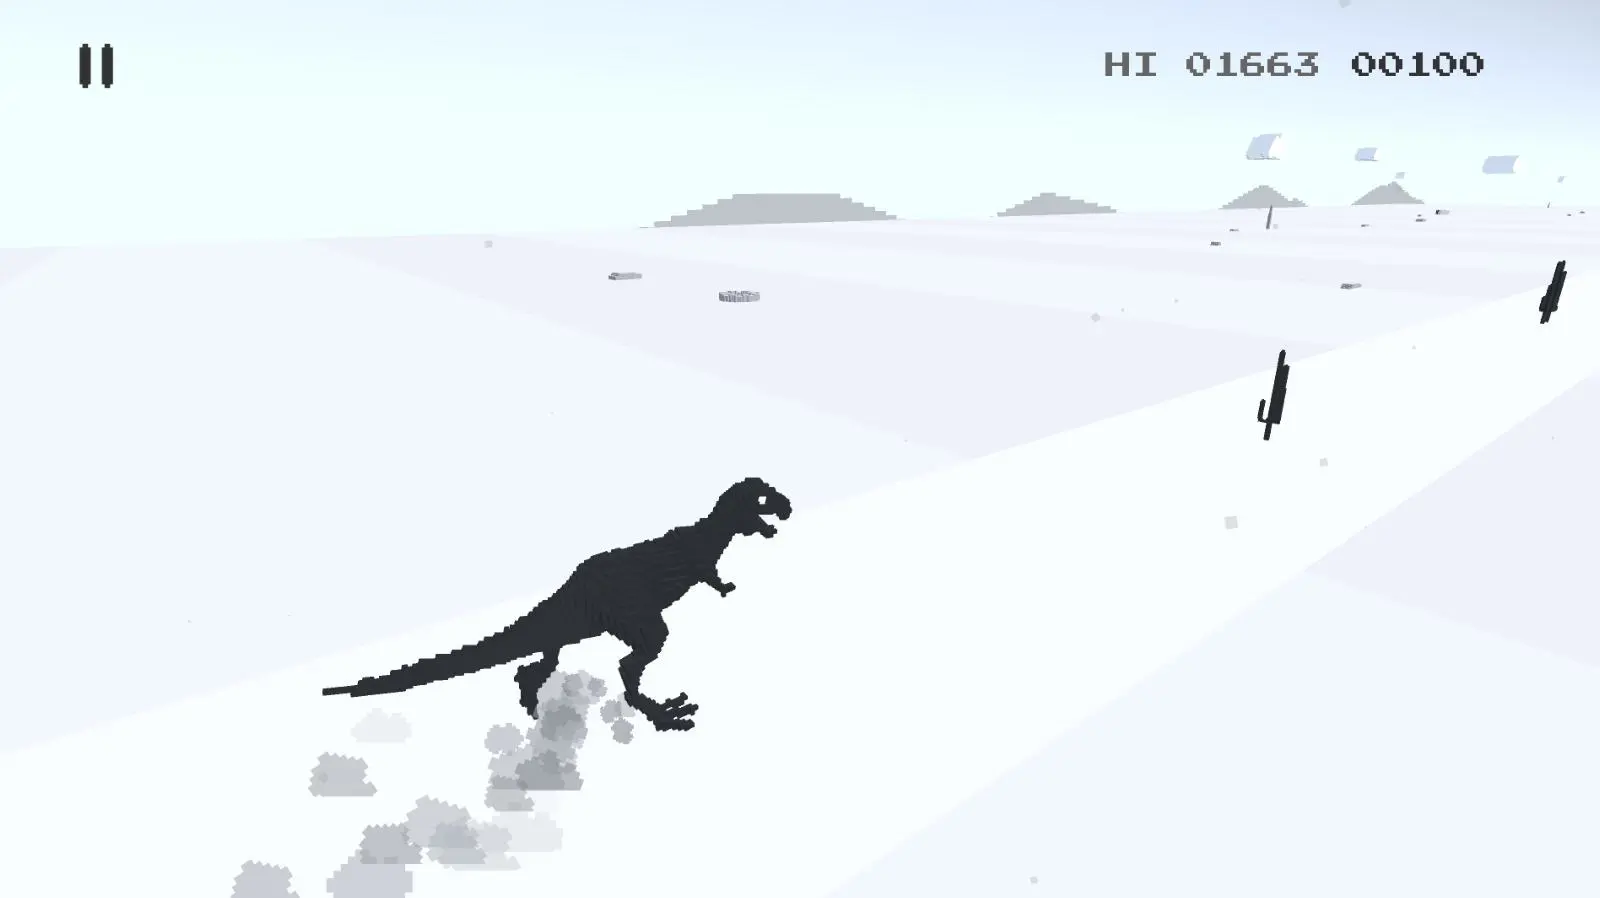 Baixe Dino T-Rex 3D Run no PC